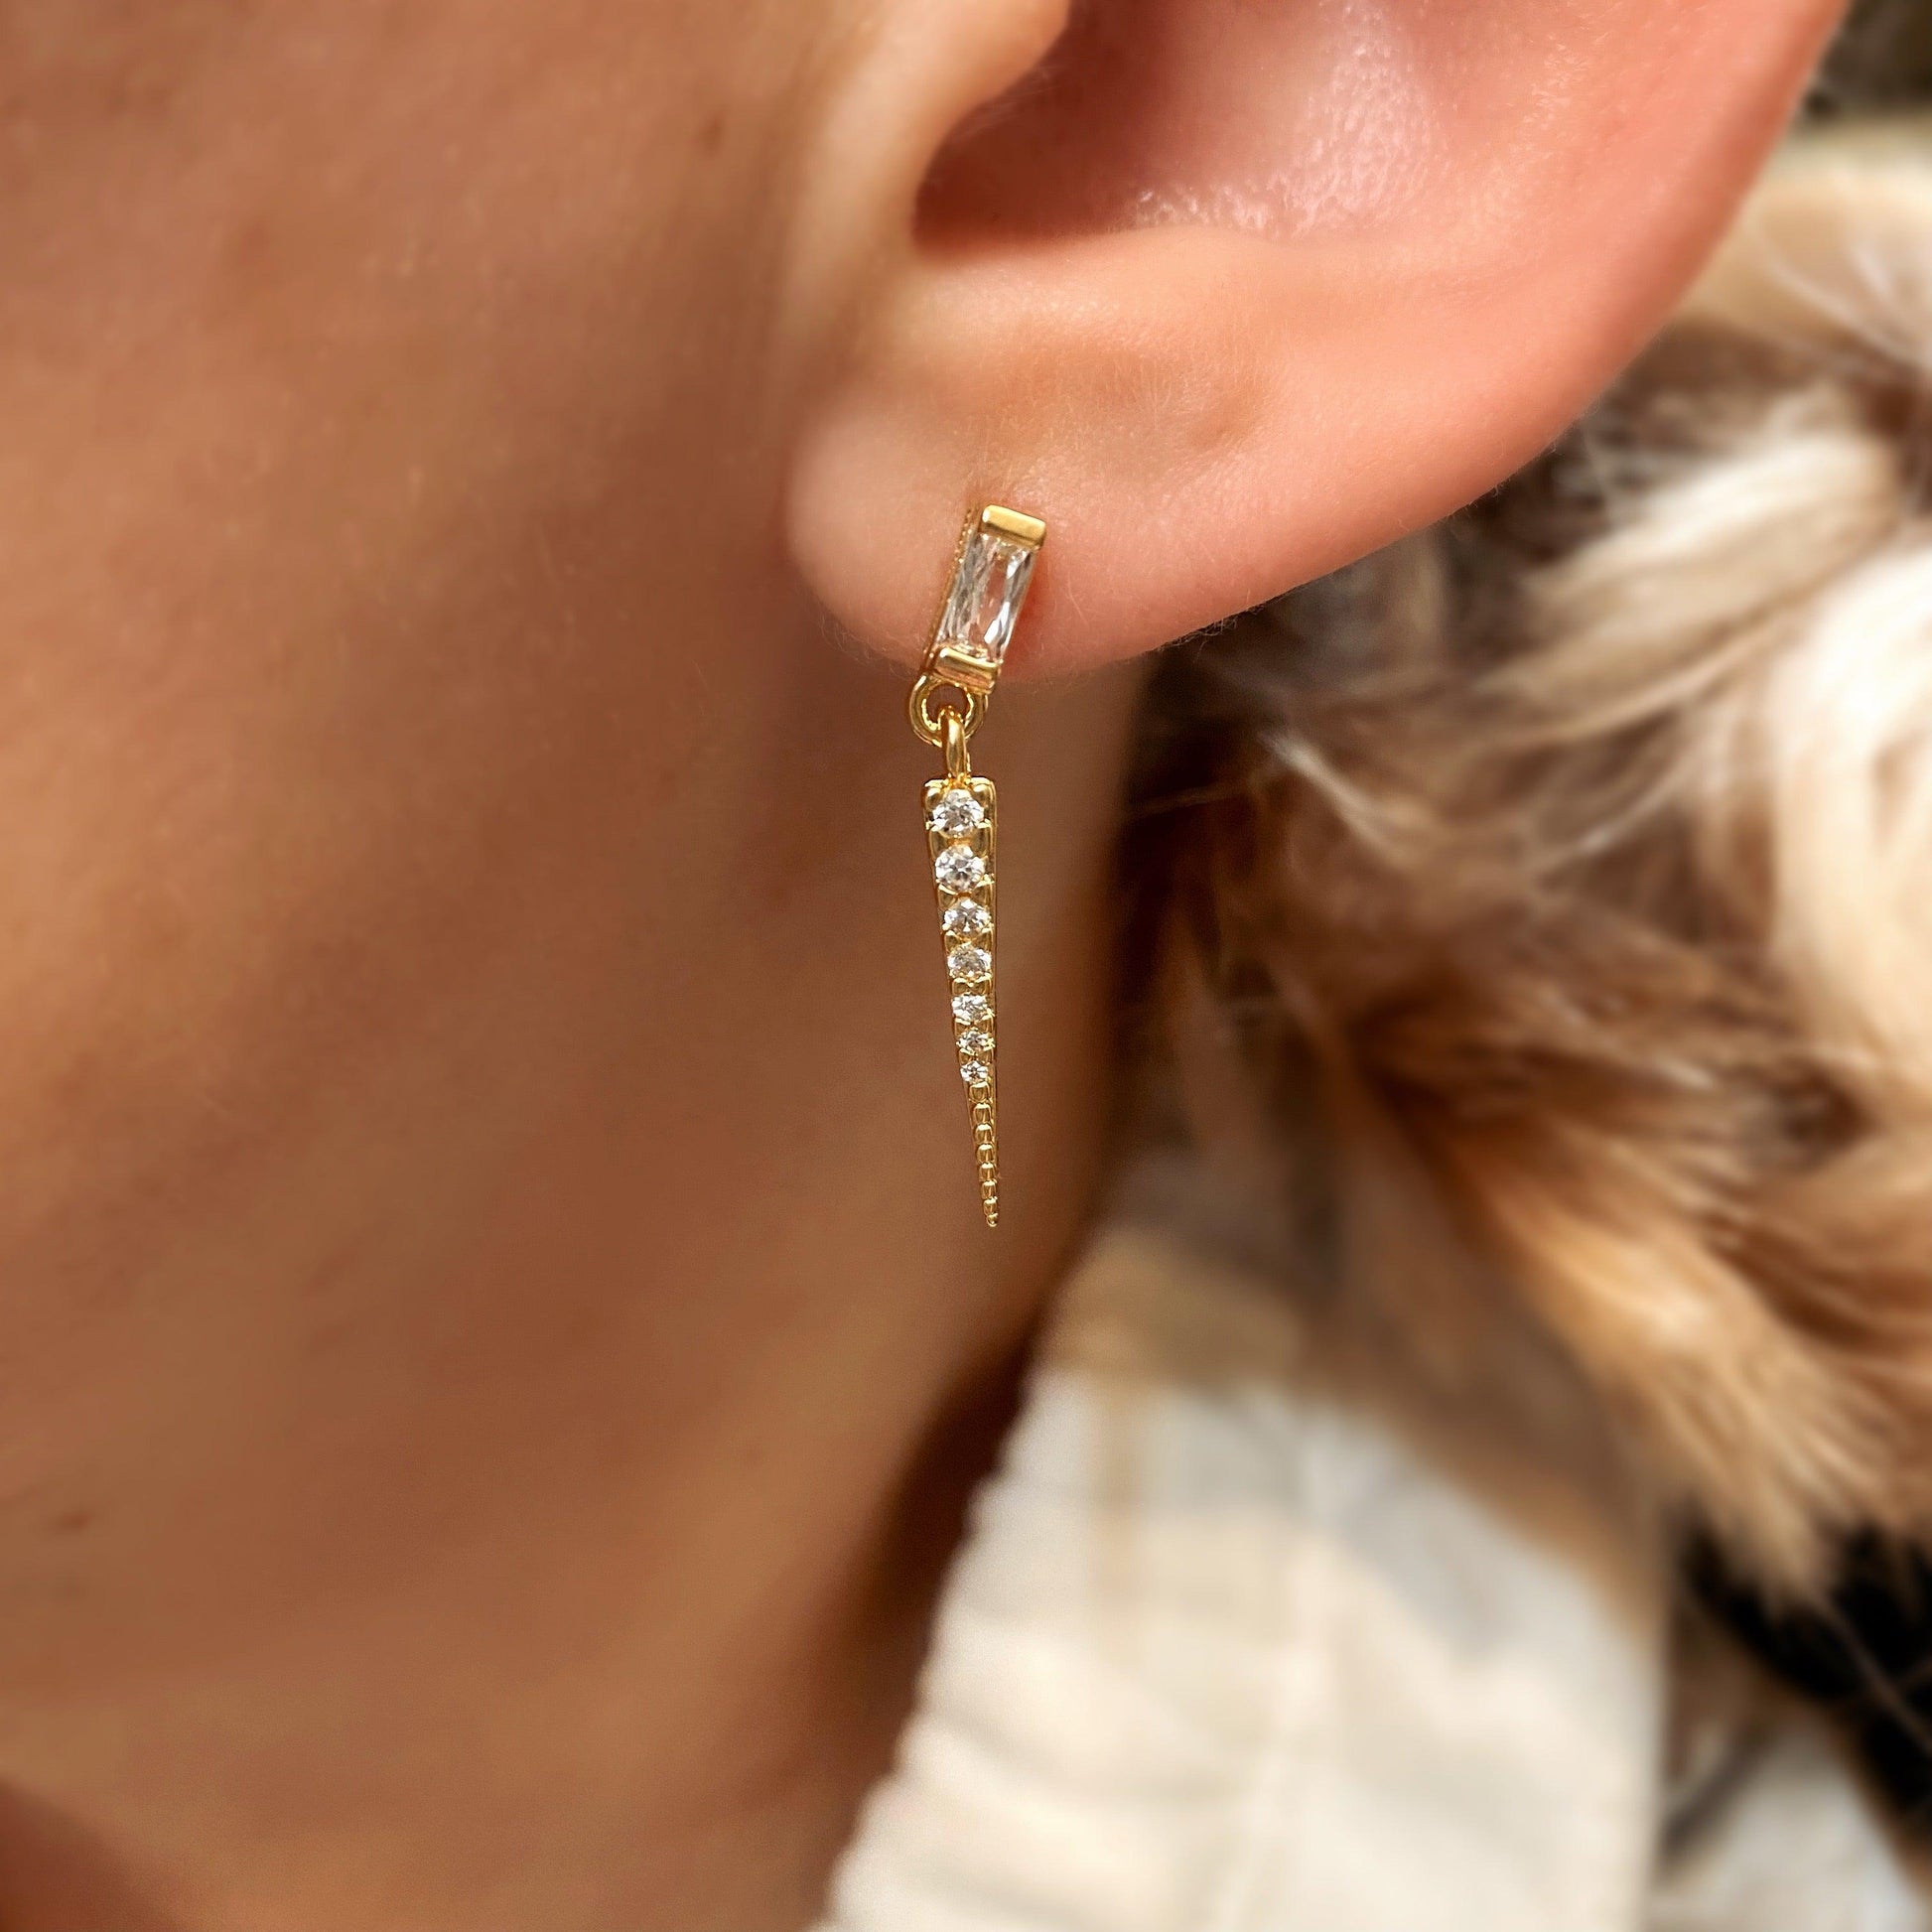 GoldFi 18k Gold Filled Earrings Featuring Baguette Cubic Zircon With Spike Drop